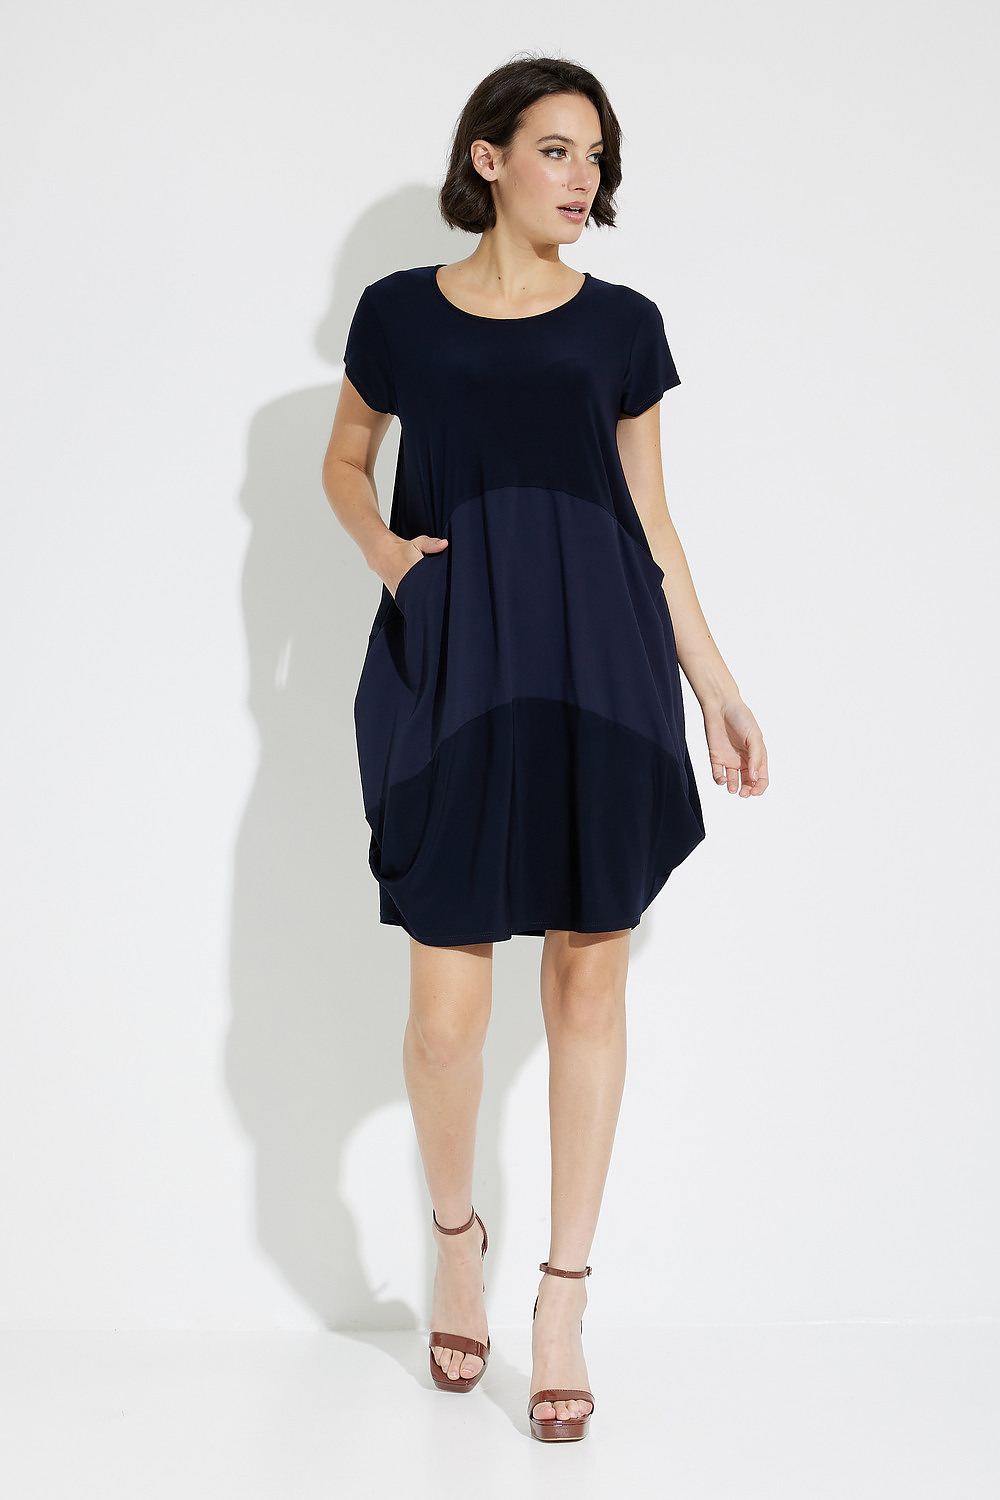 Short Sleeved Mini-Dress Style 231082. Midnight Blue